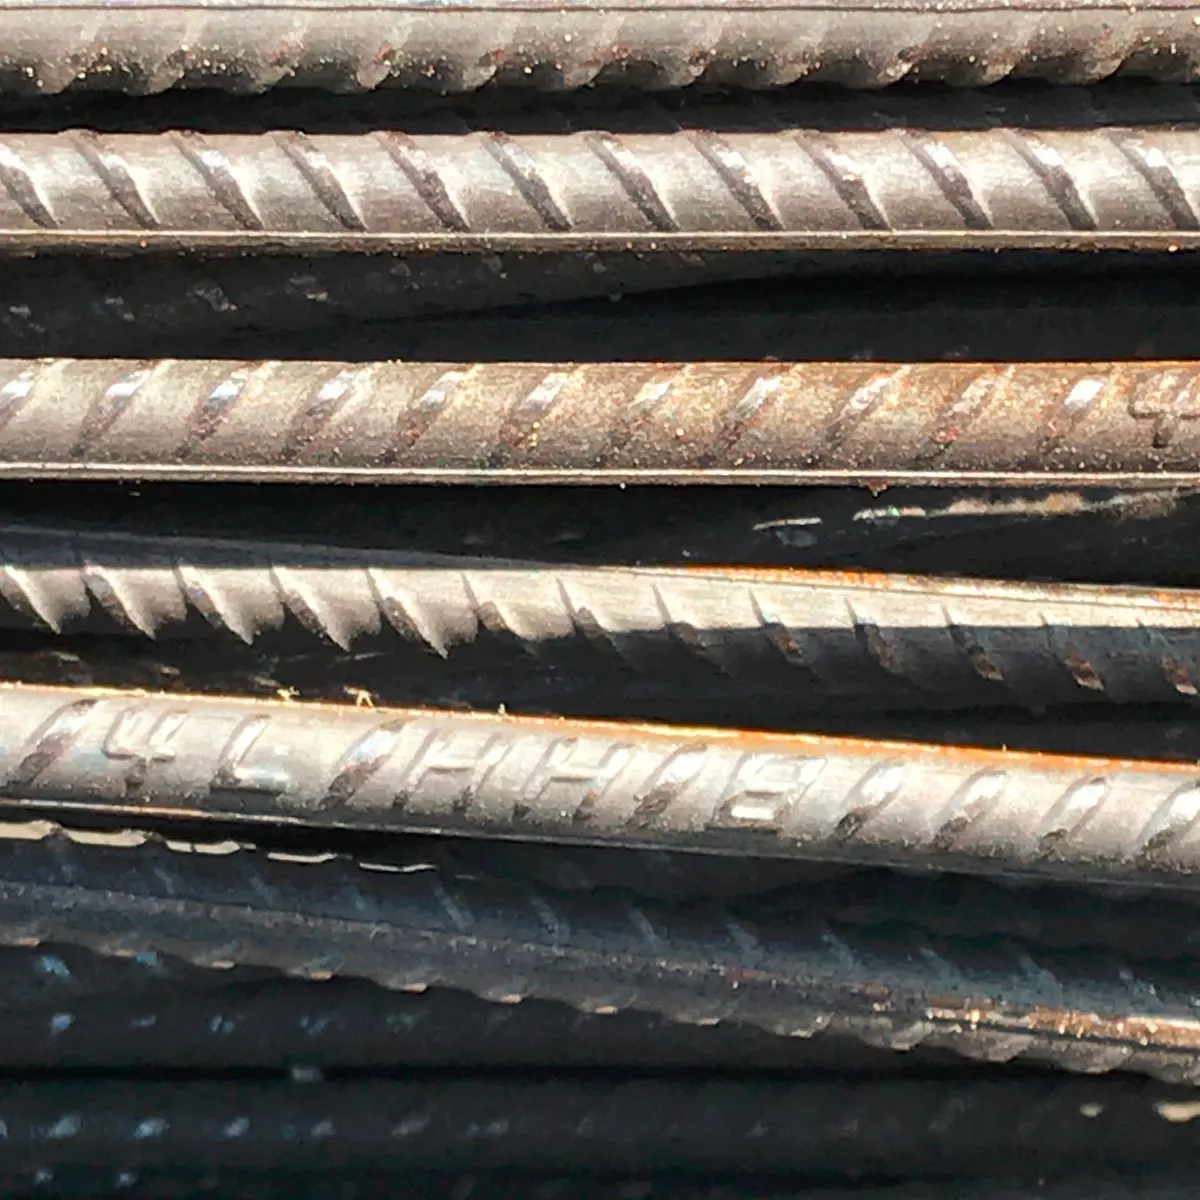 Prime Carbon Stahl Bewehrung Warm gewalzte Bewehrung warm gewalzte Bewehrung struktur Zusammensetzung verformte Stahls tange